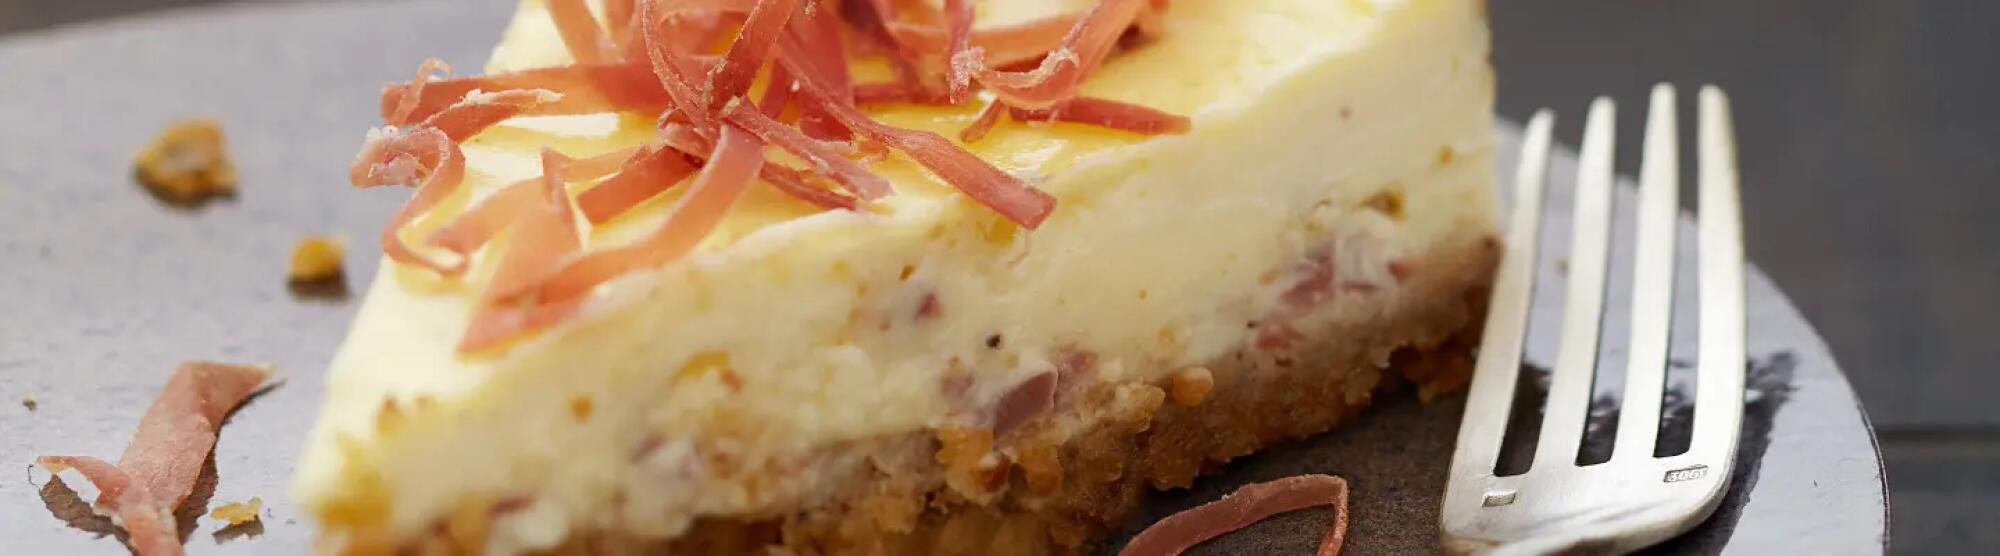 LA02_cheesecake-jambon-fromage-frais-carre-frais